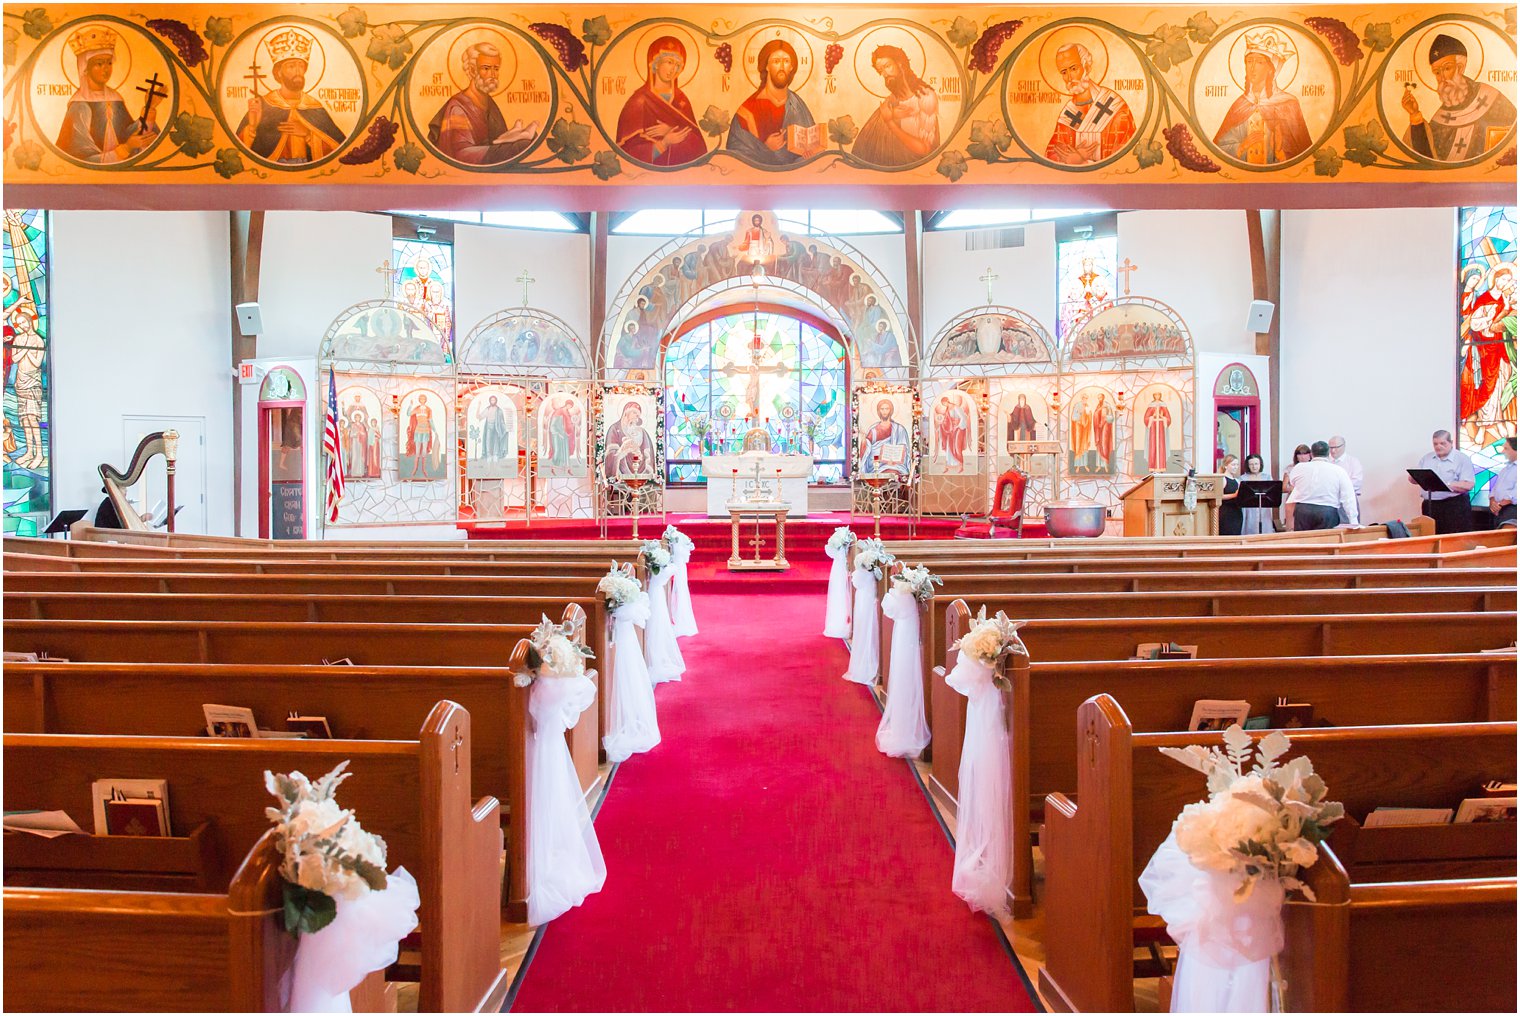 St. Anthony Orthodox Church in Bergenfield, NJ